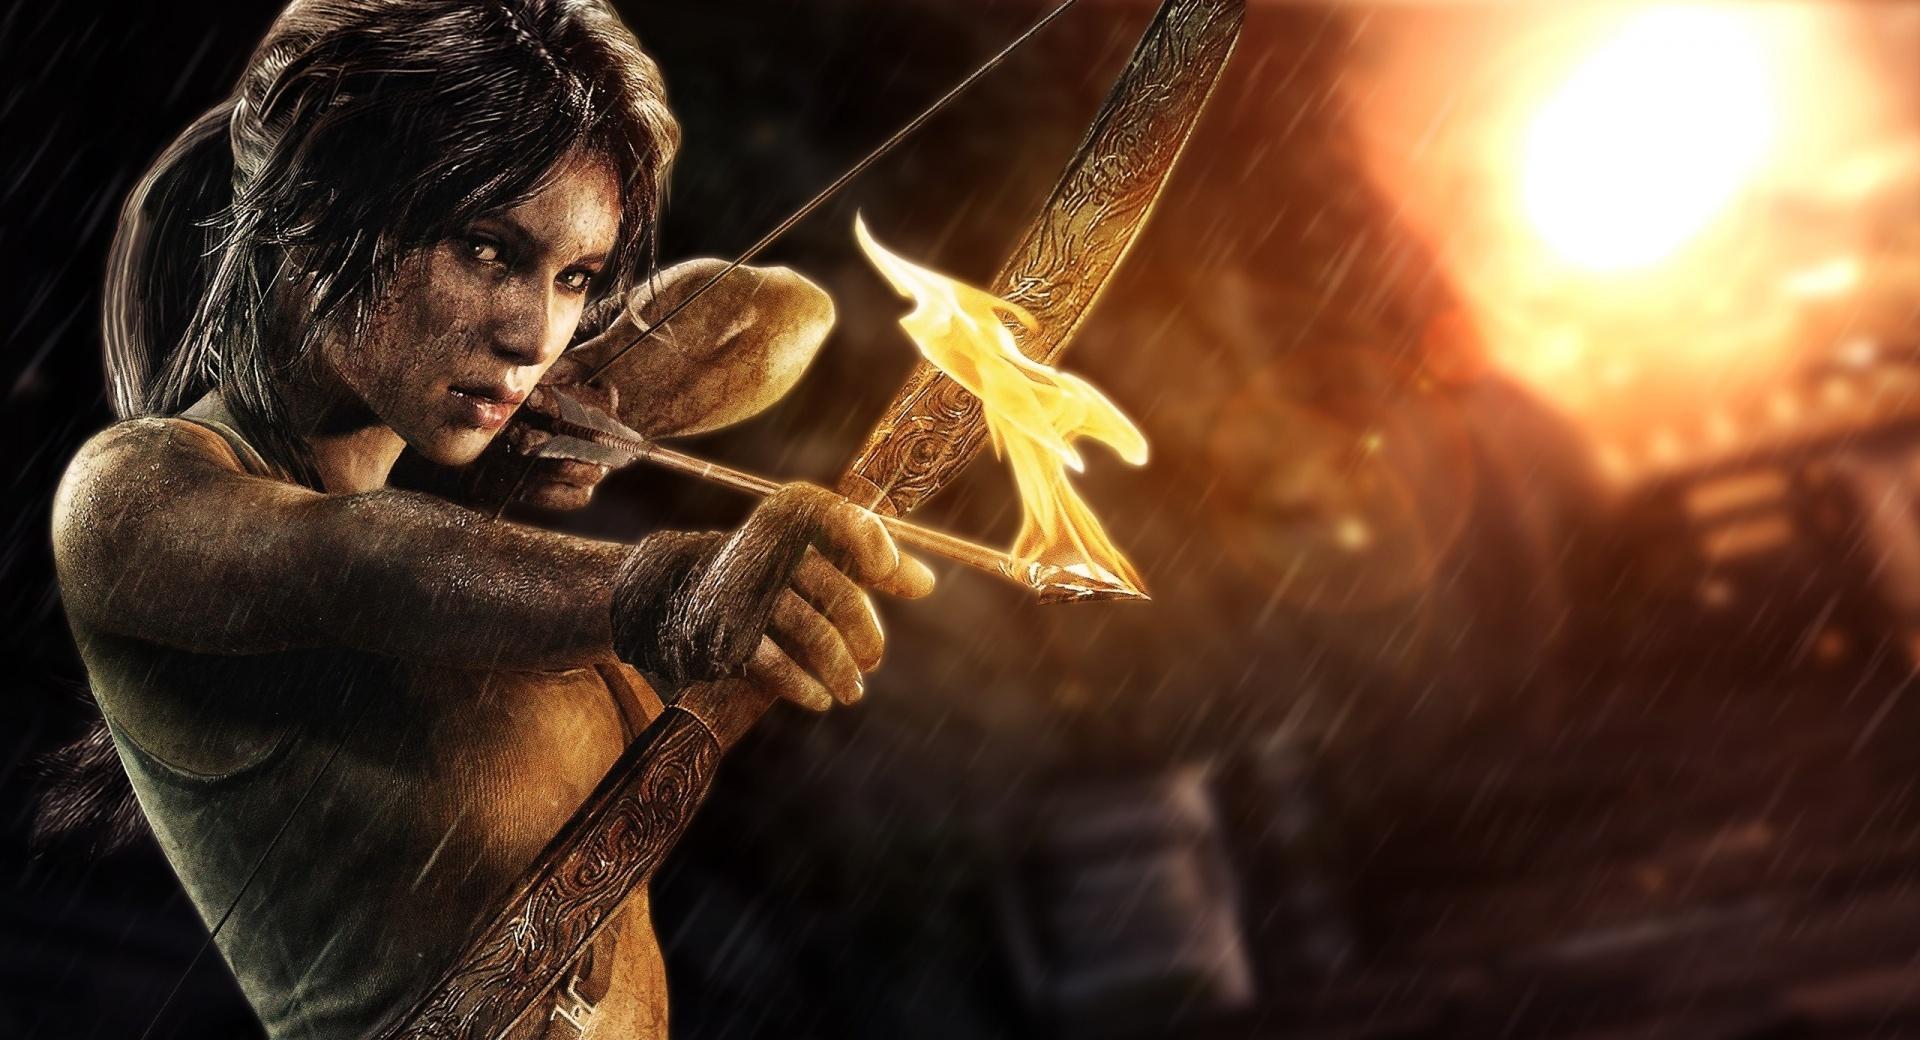 Lara Croft Bow and Arrow at 2048 x 2048 iPad size wallpapers HD quality